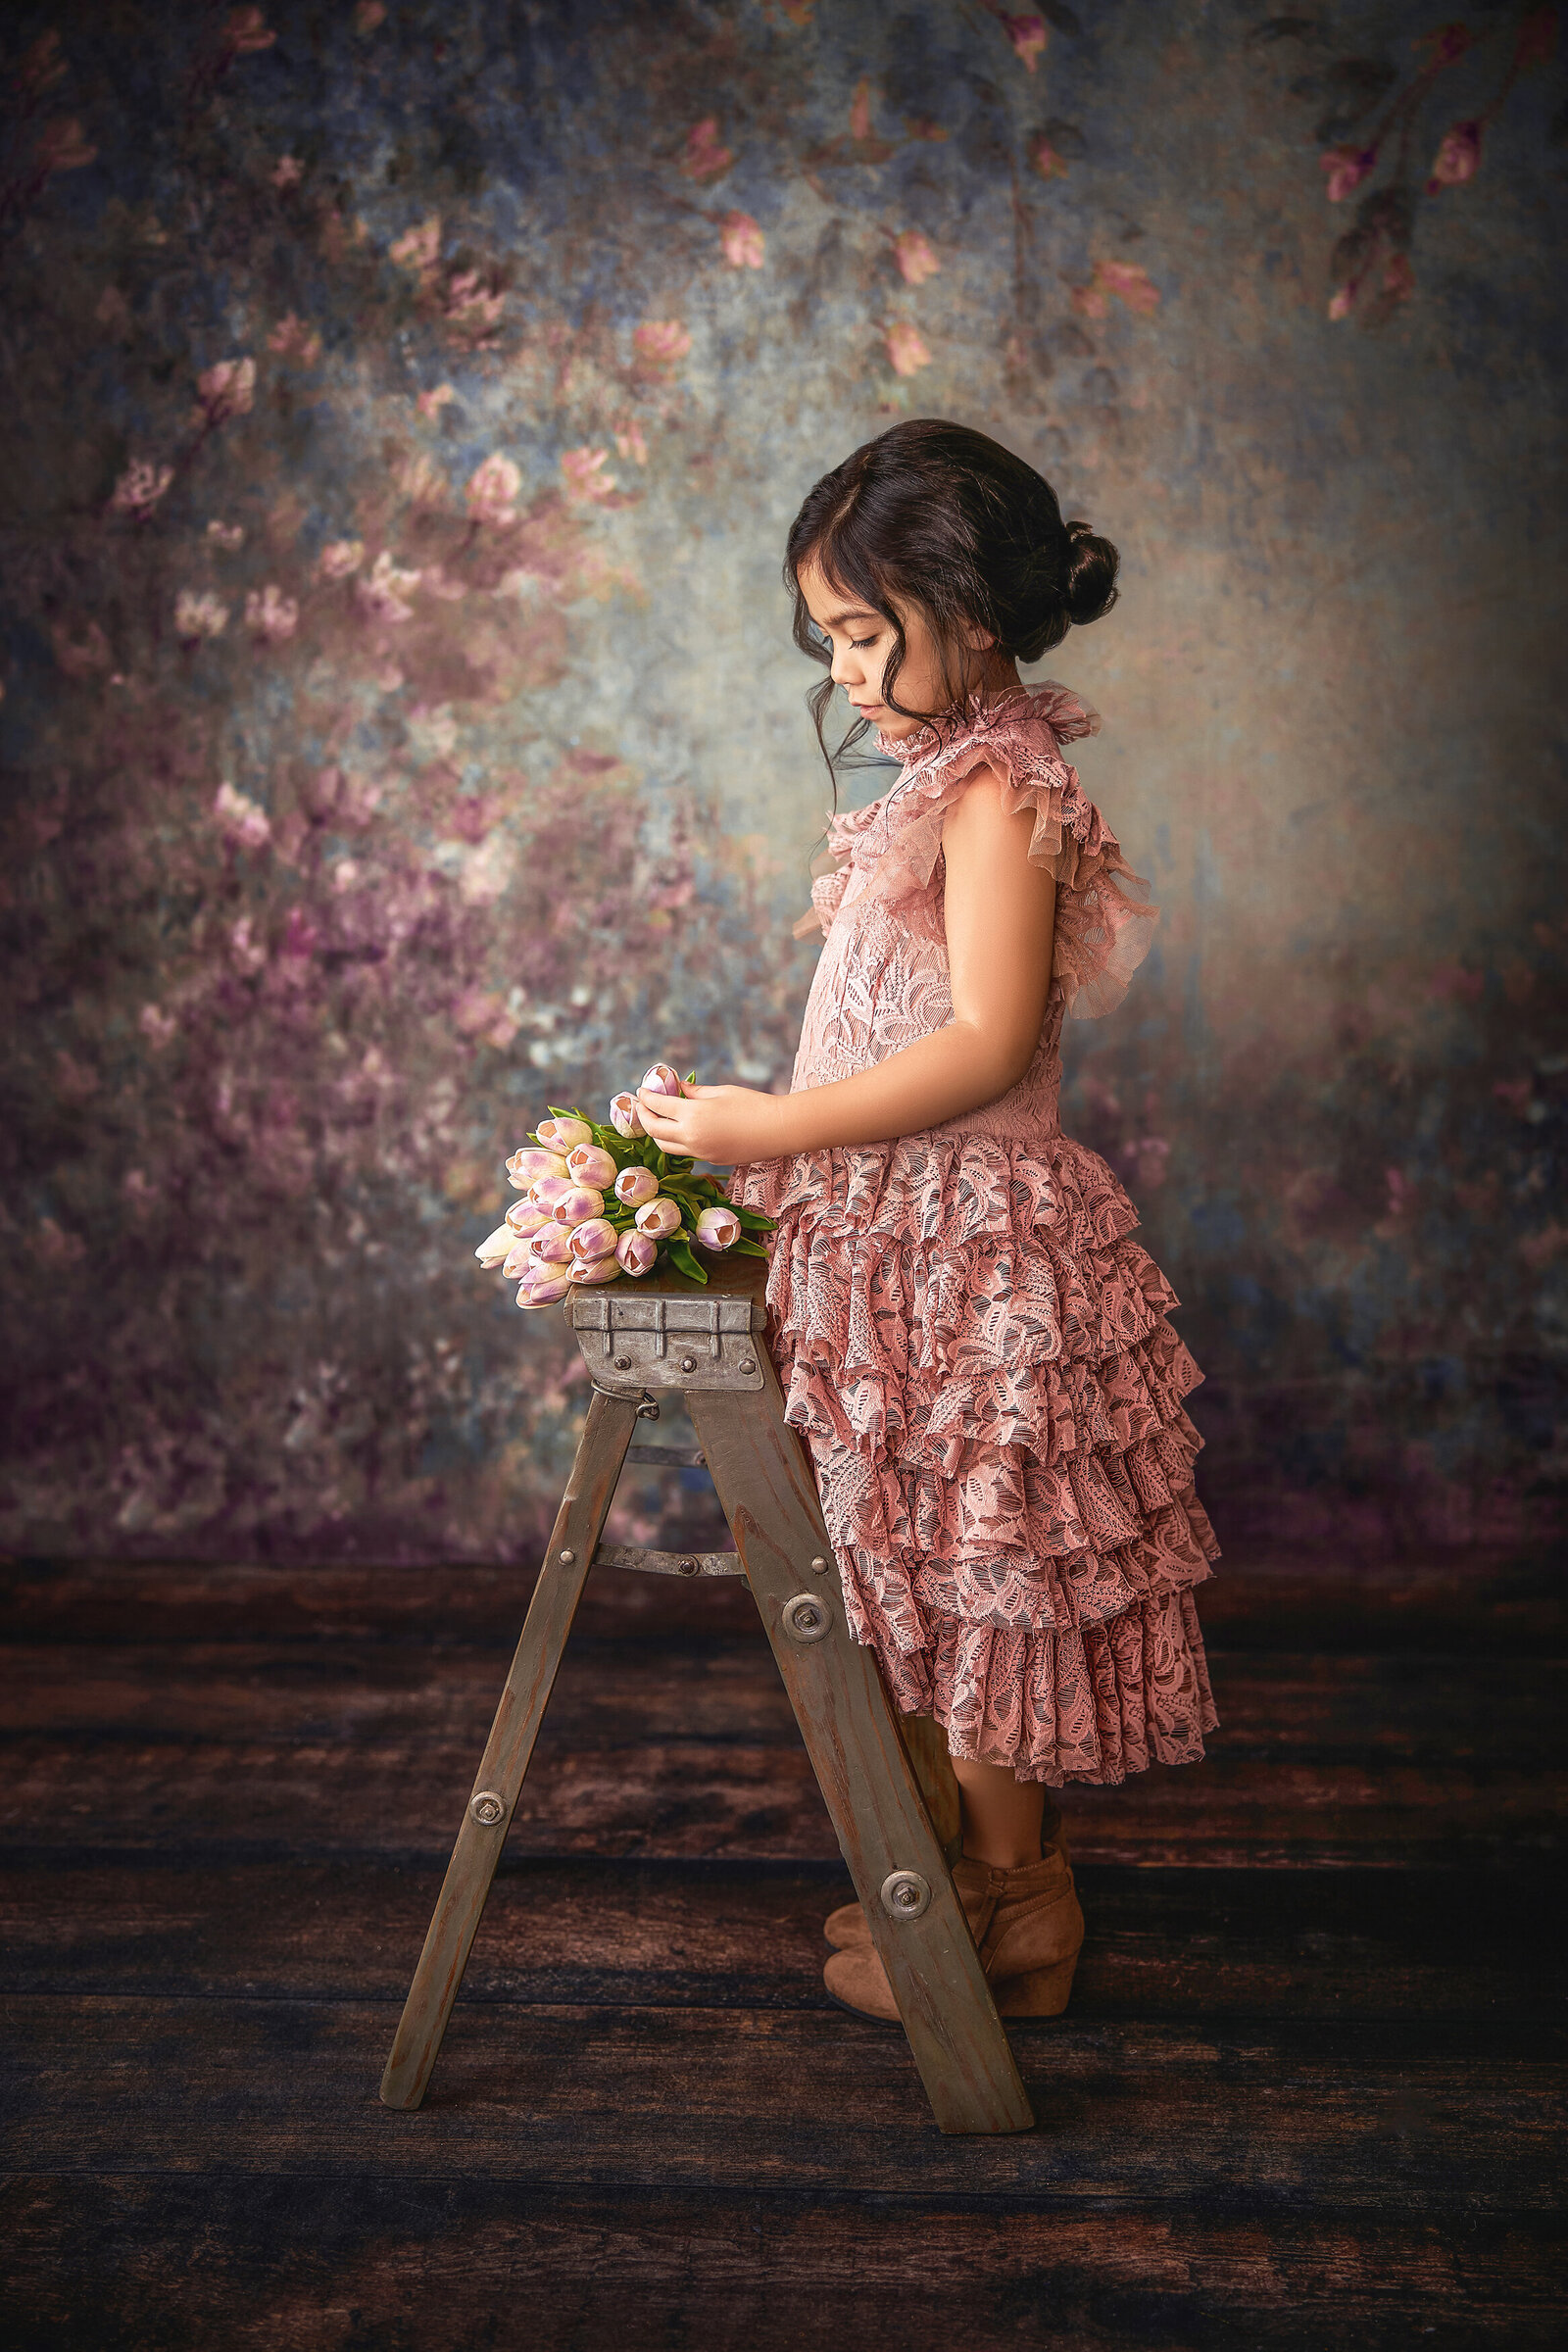 atlanta-best-award-winning-family-portrait-studio-fine-art-girl-children-flowers-lace-photography-photographer-twin-rivers-01